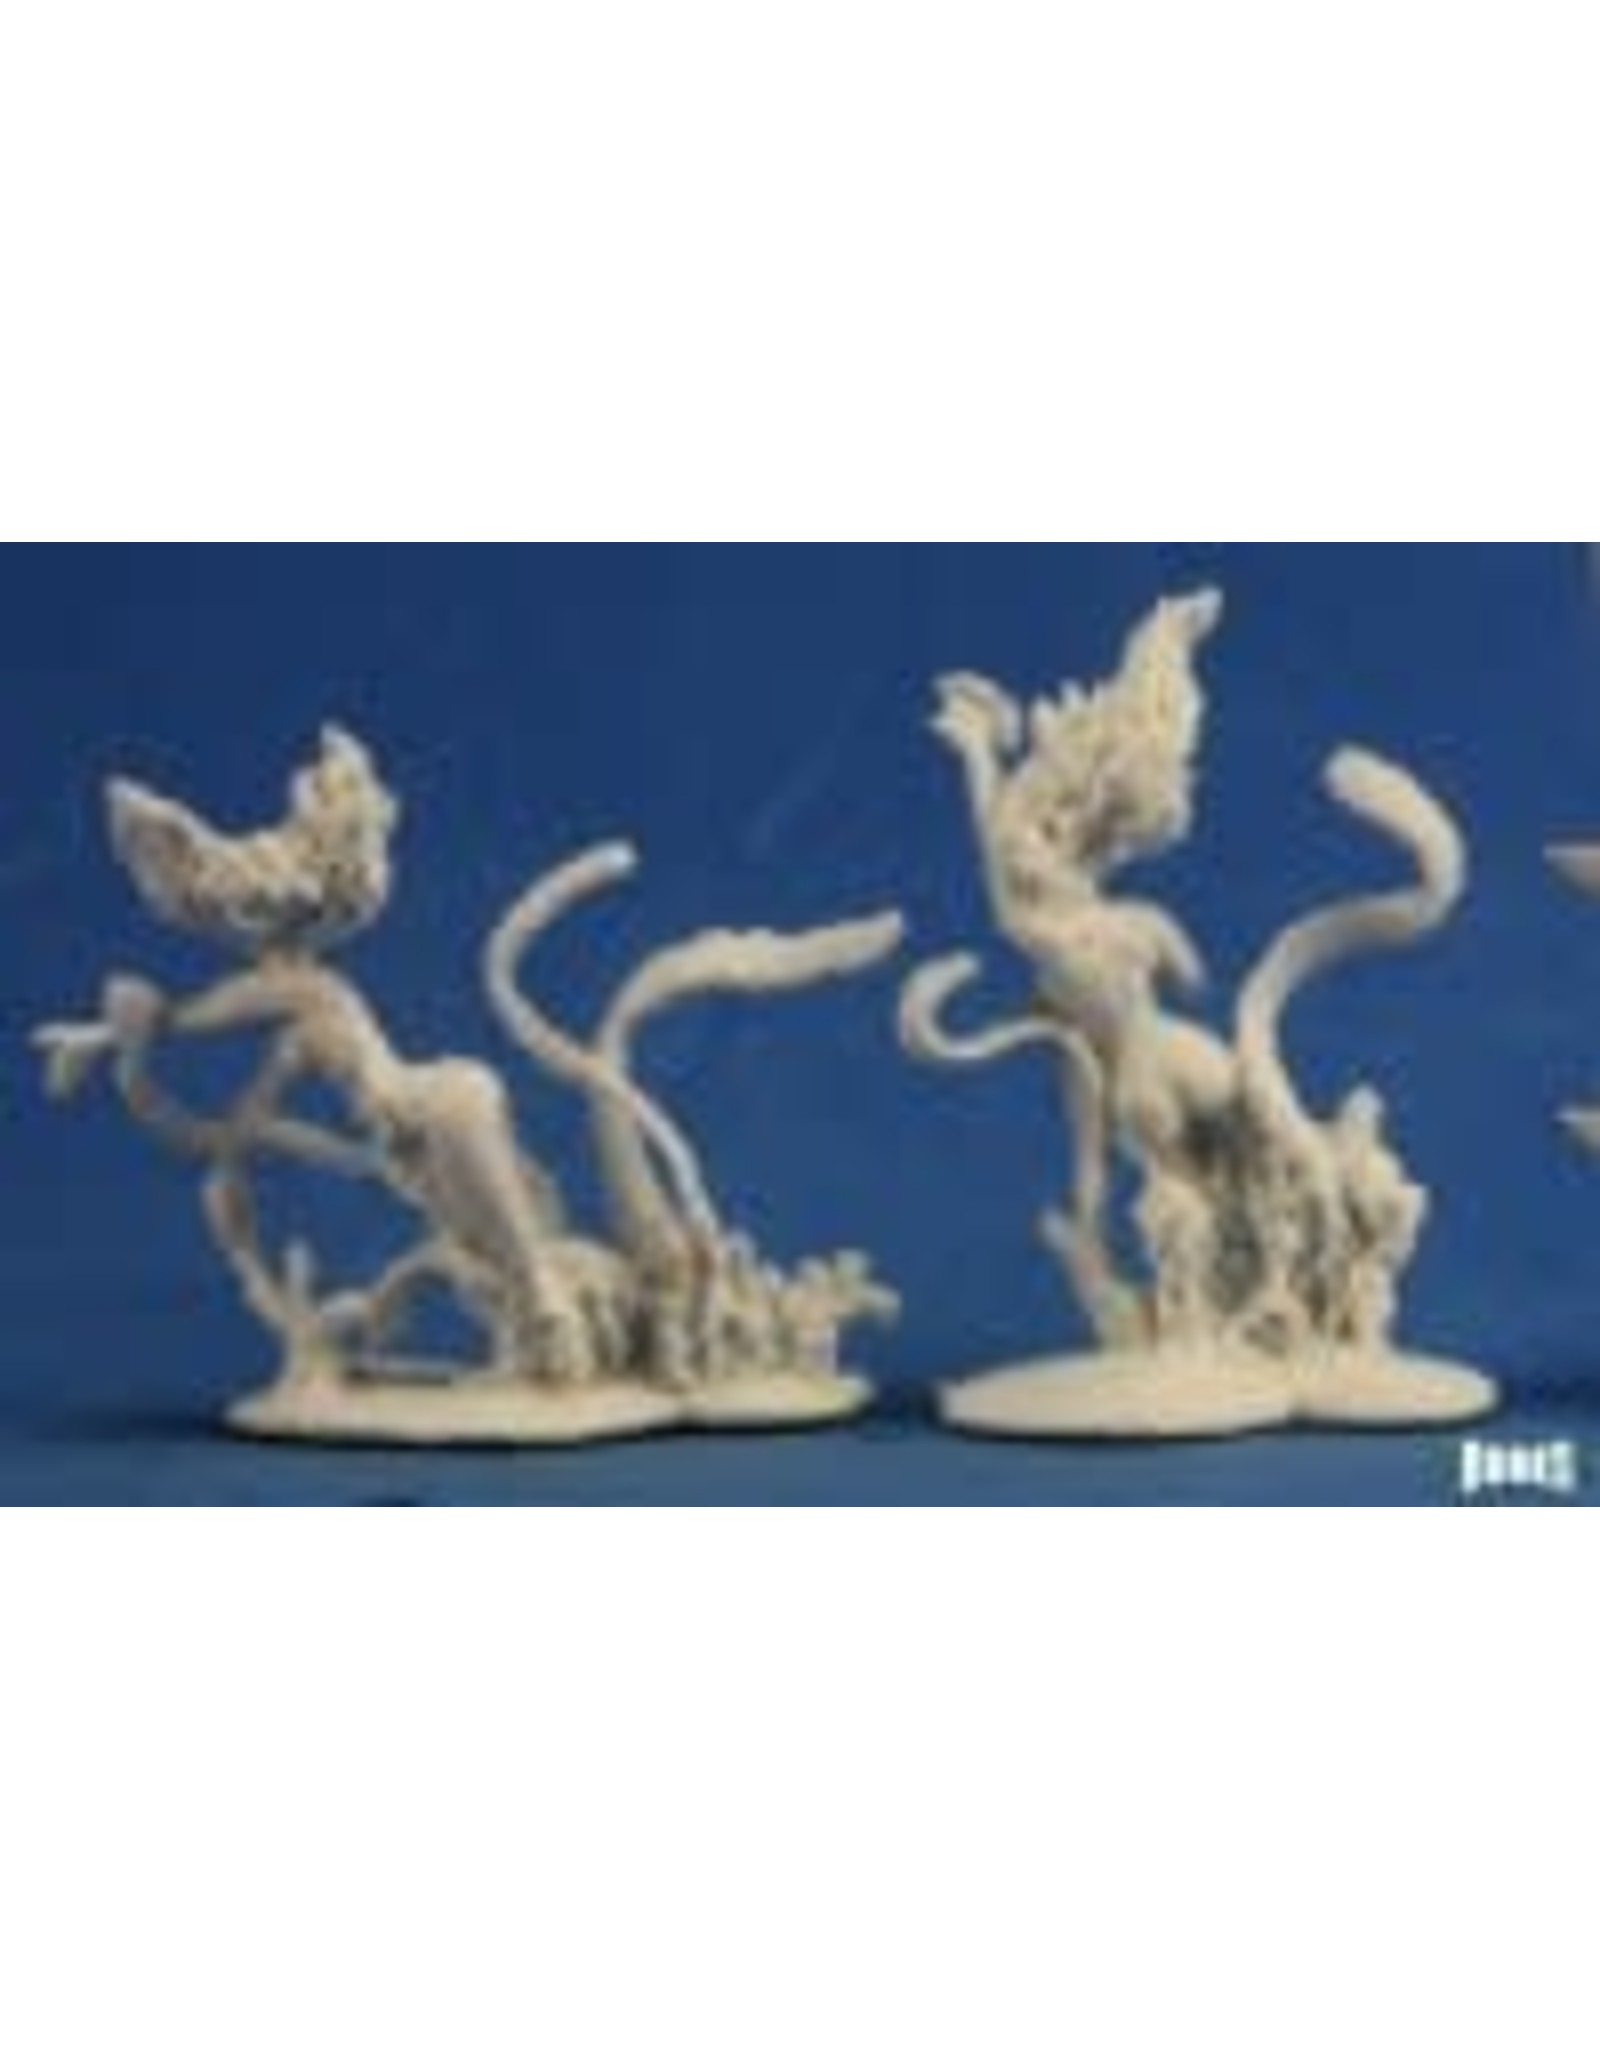 Reaper Miniatures Bones: Kelpies (2)